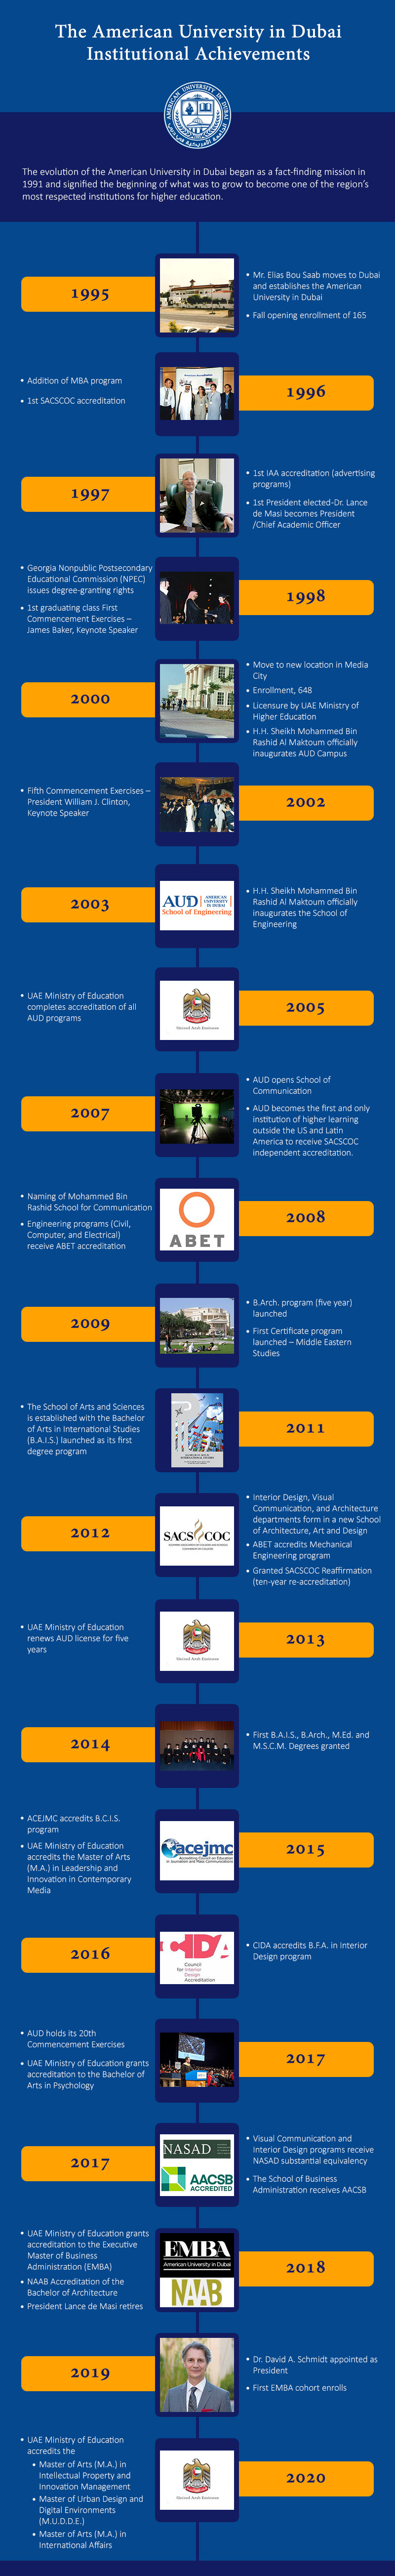 AUD Institutional Achievements Timeline